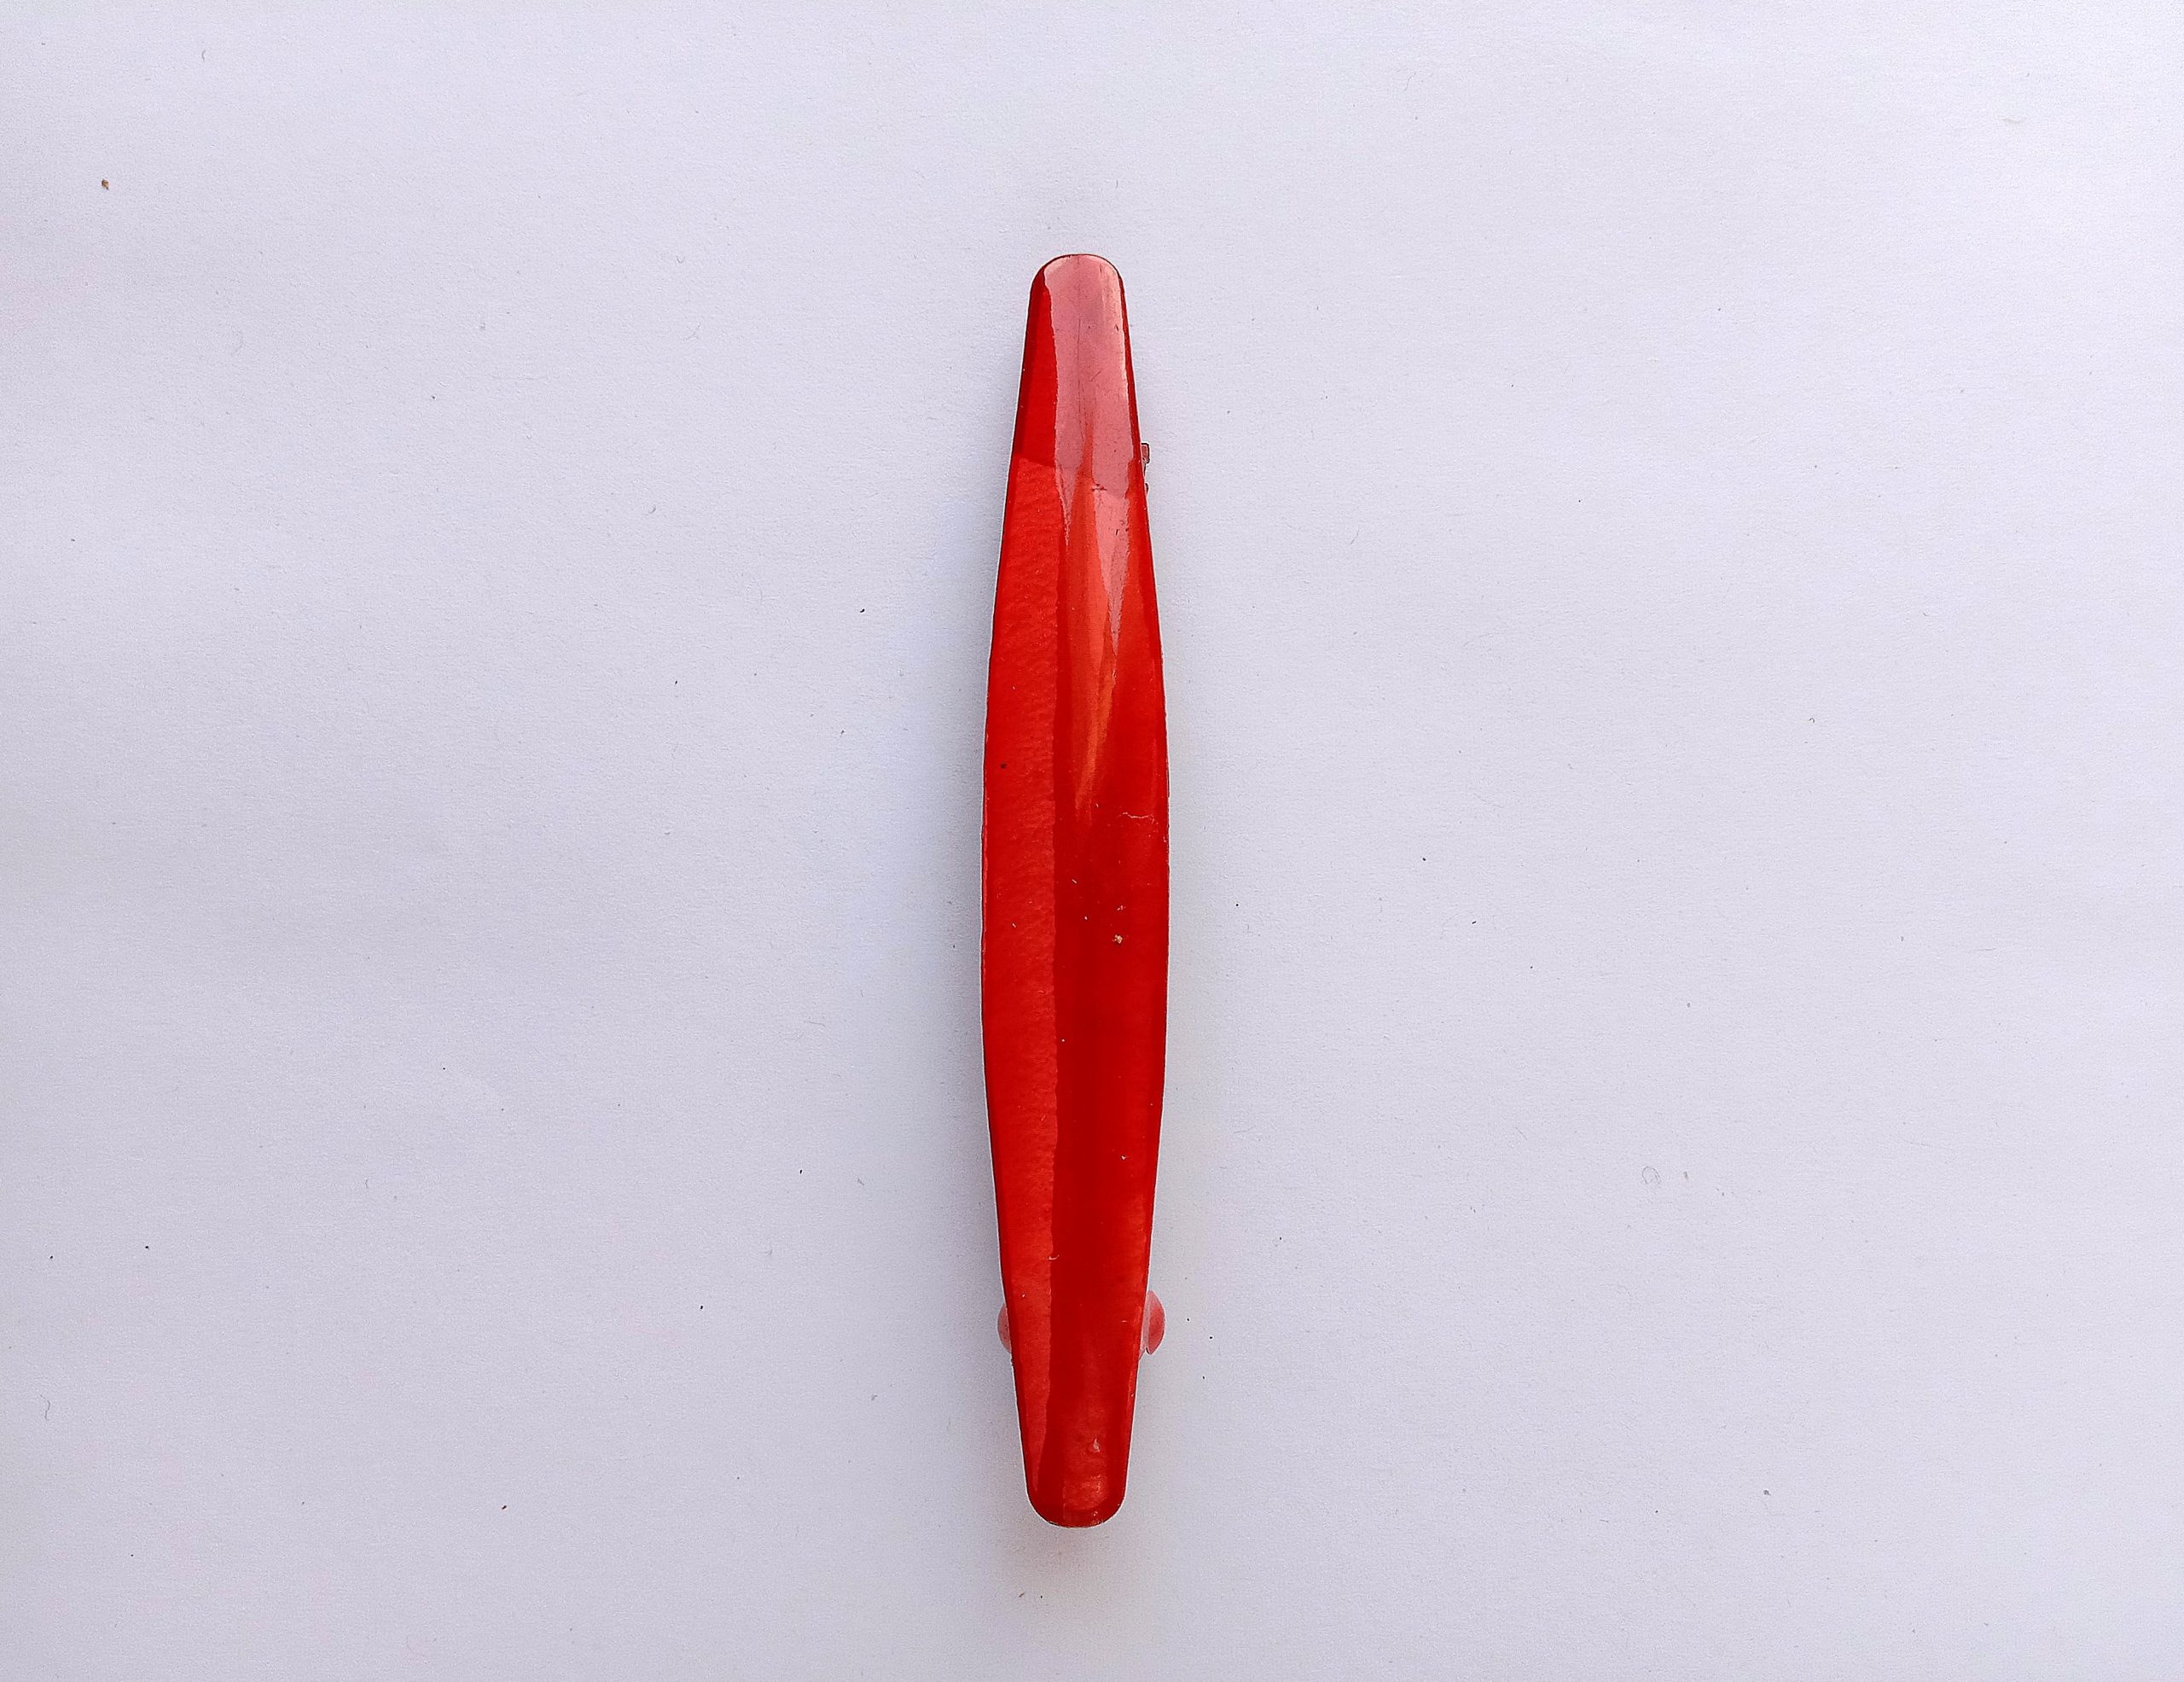 A red hair pin